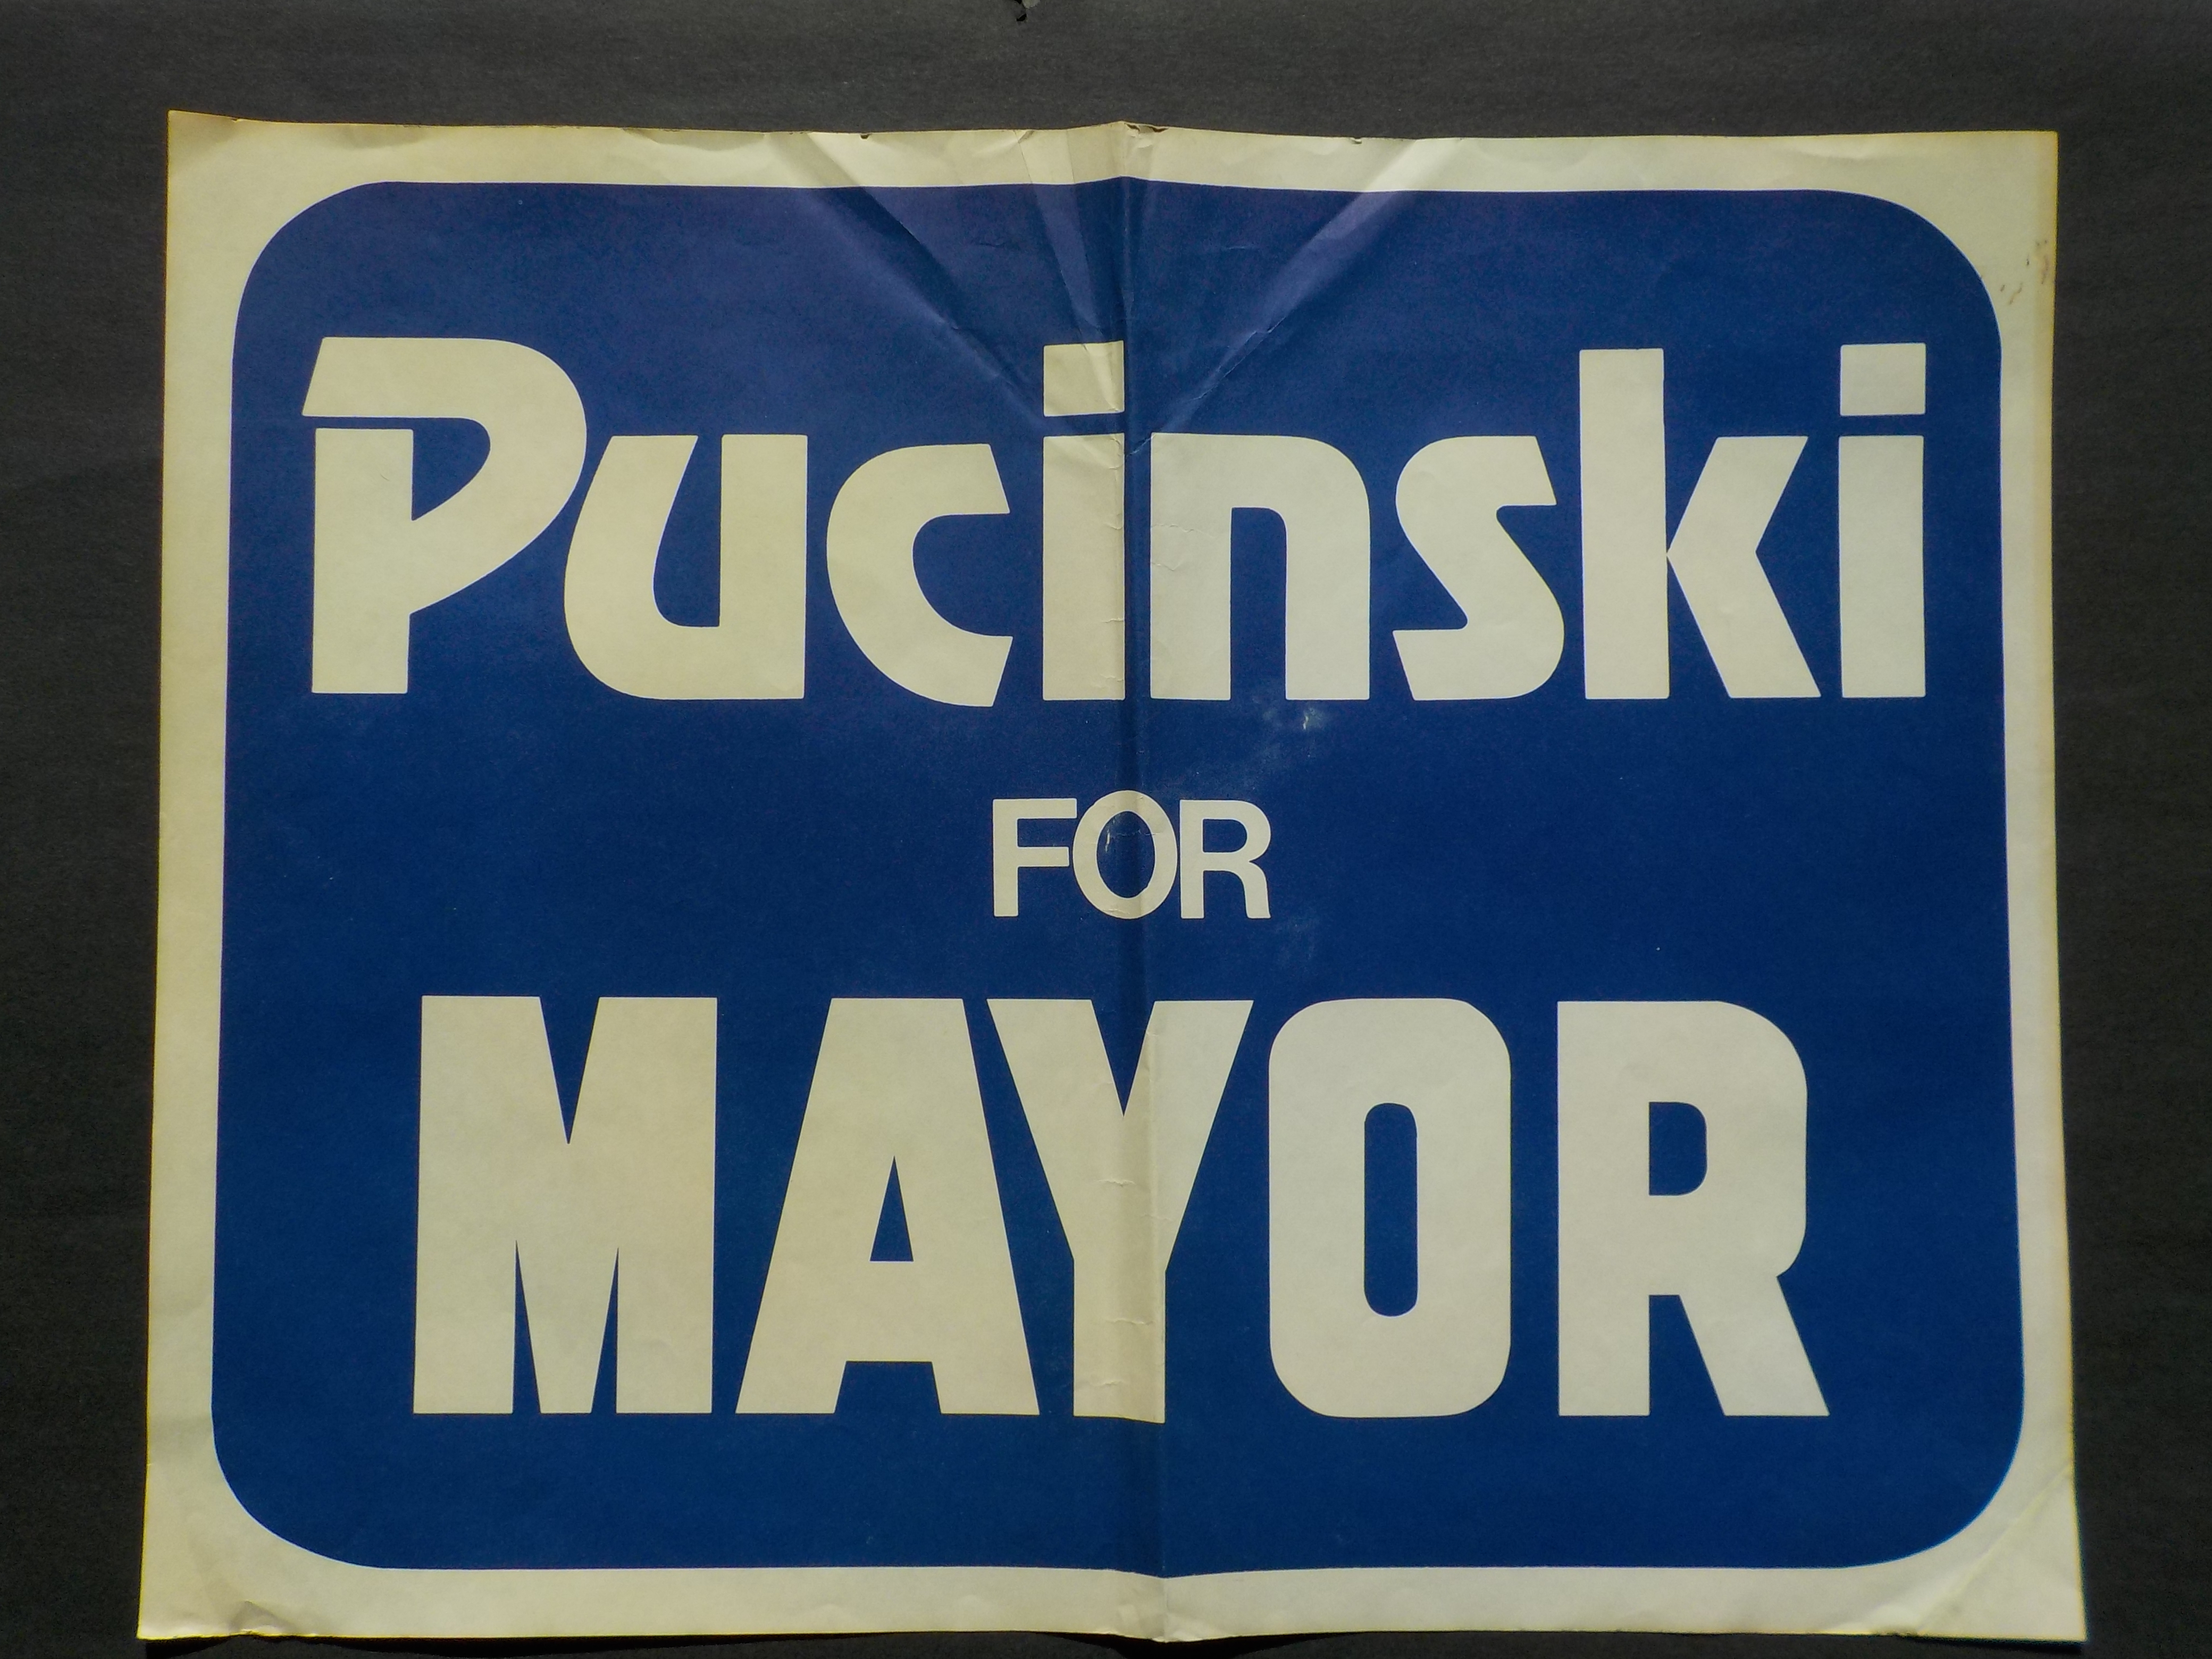 Pucinski Mayor poster